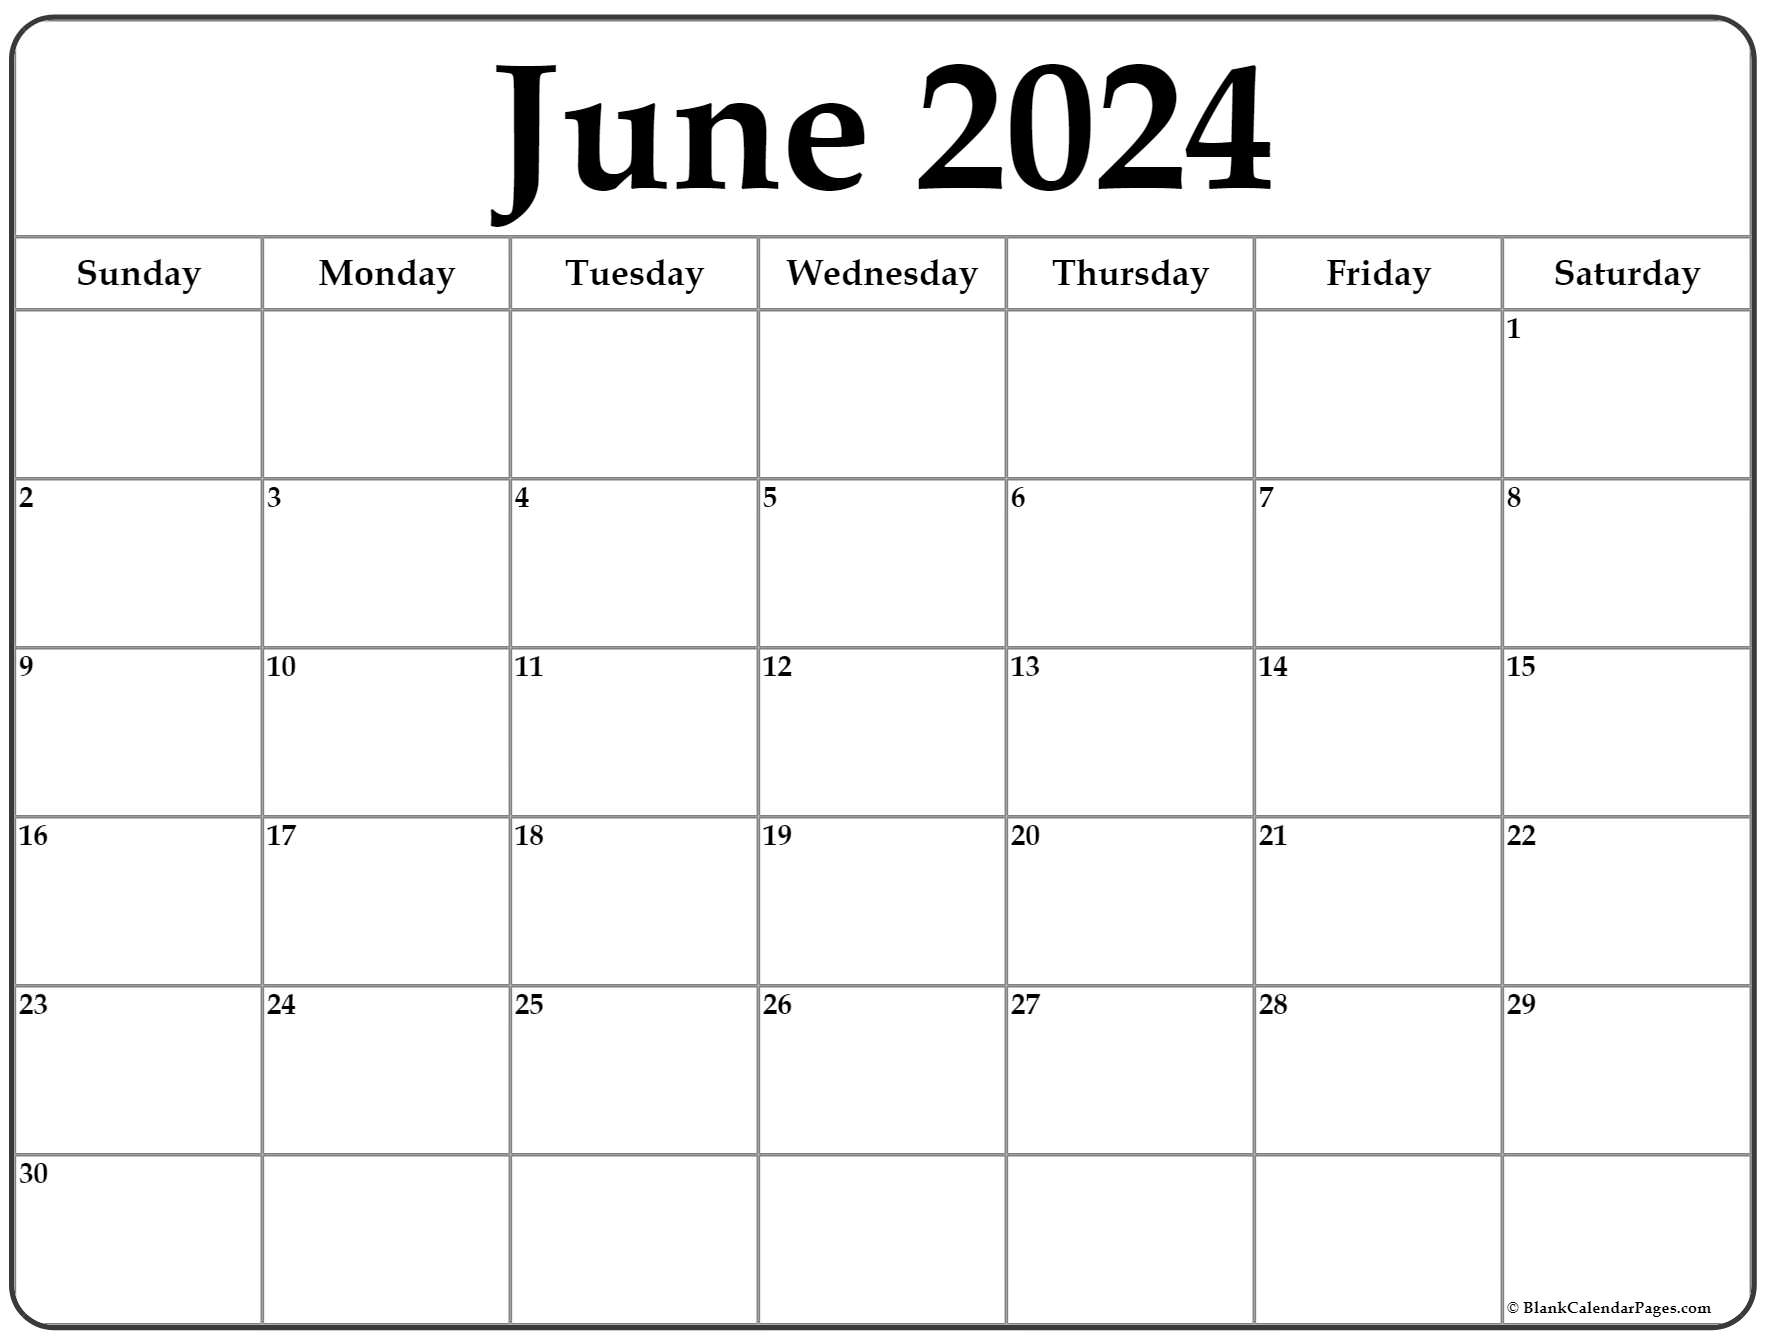 June Monthly Calendar 2022 June 2022 Calendar | Free Printable Calendar Templates